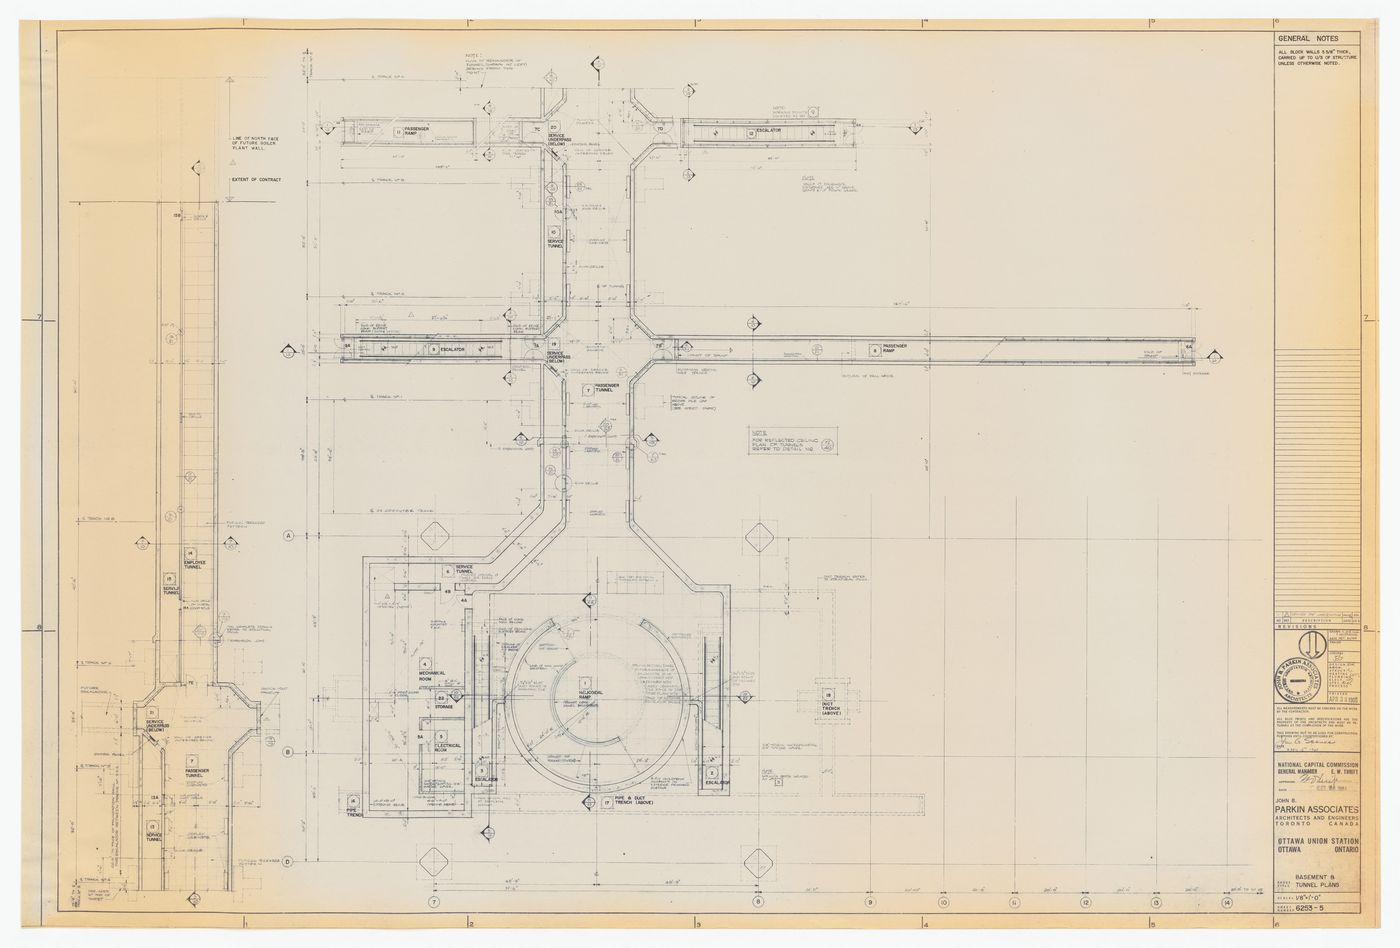 Basement and tunnel plan for Ottawa Union Station, Ottawa, Ontario